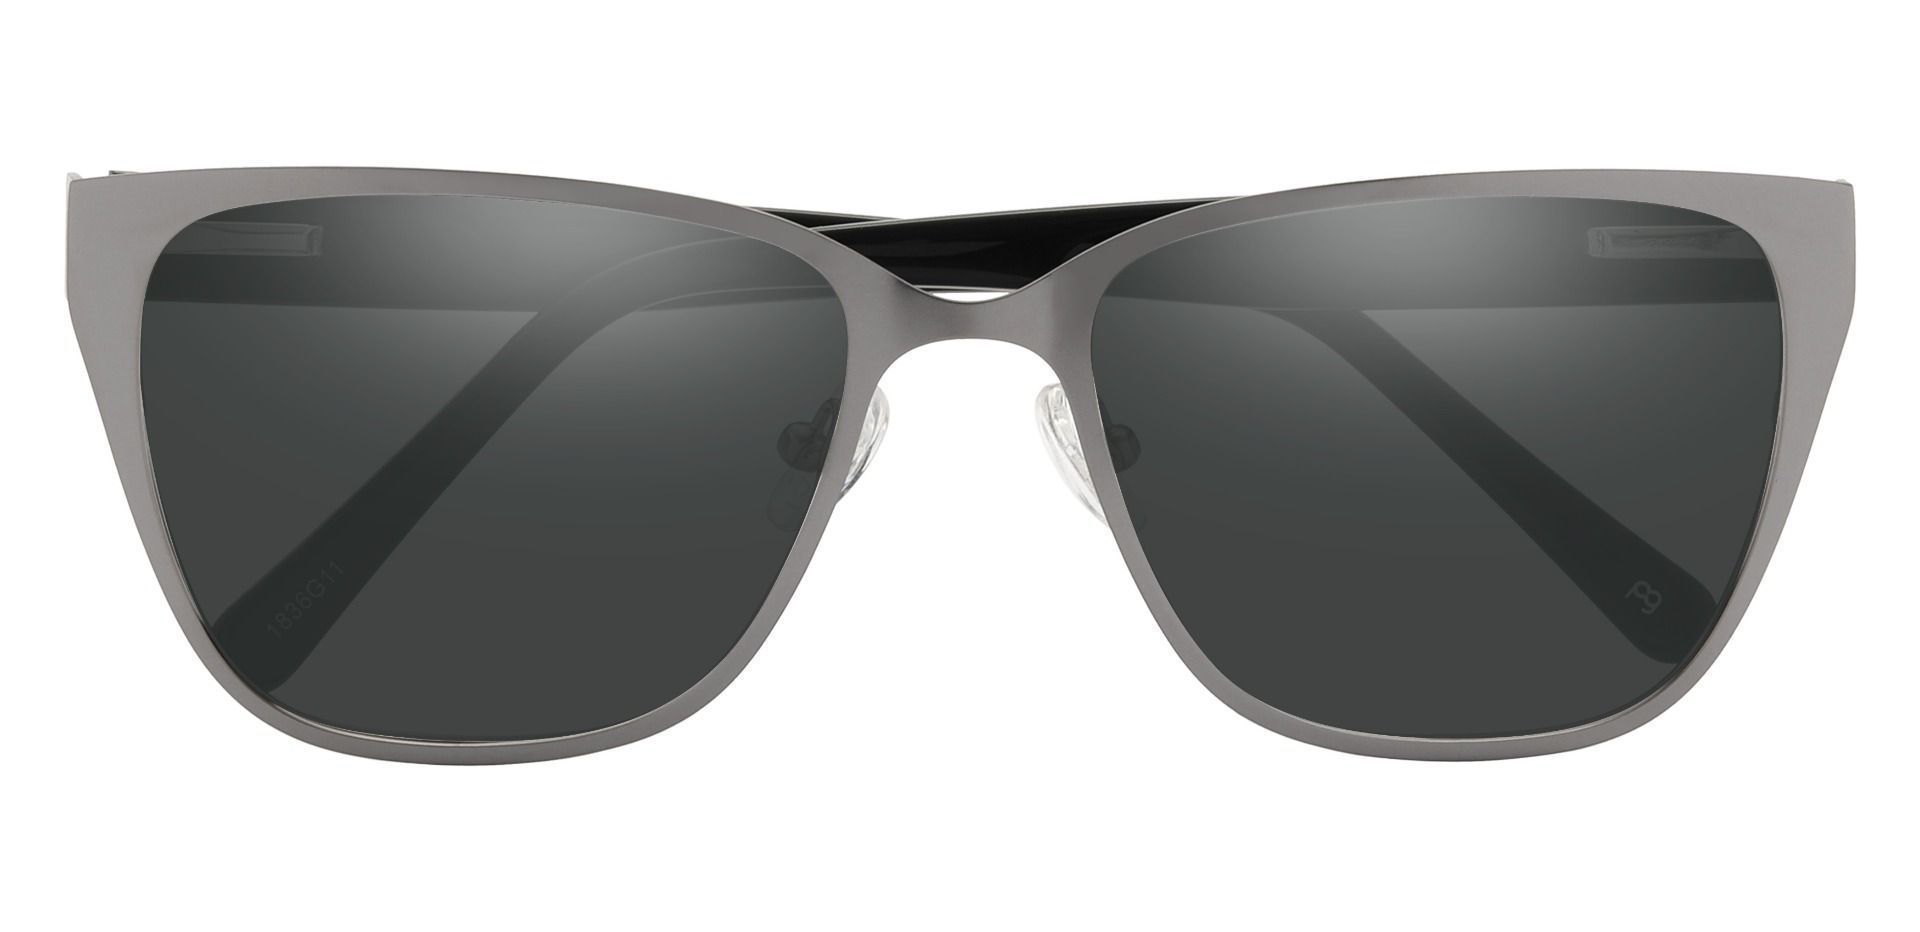 Stowe Square Prescription Sunglasses - Gray Frame With Gray Lenses